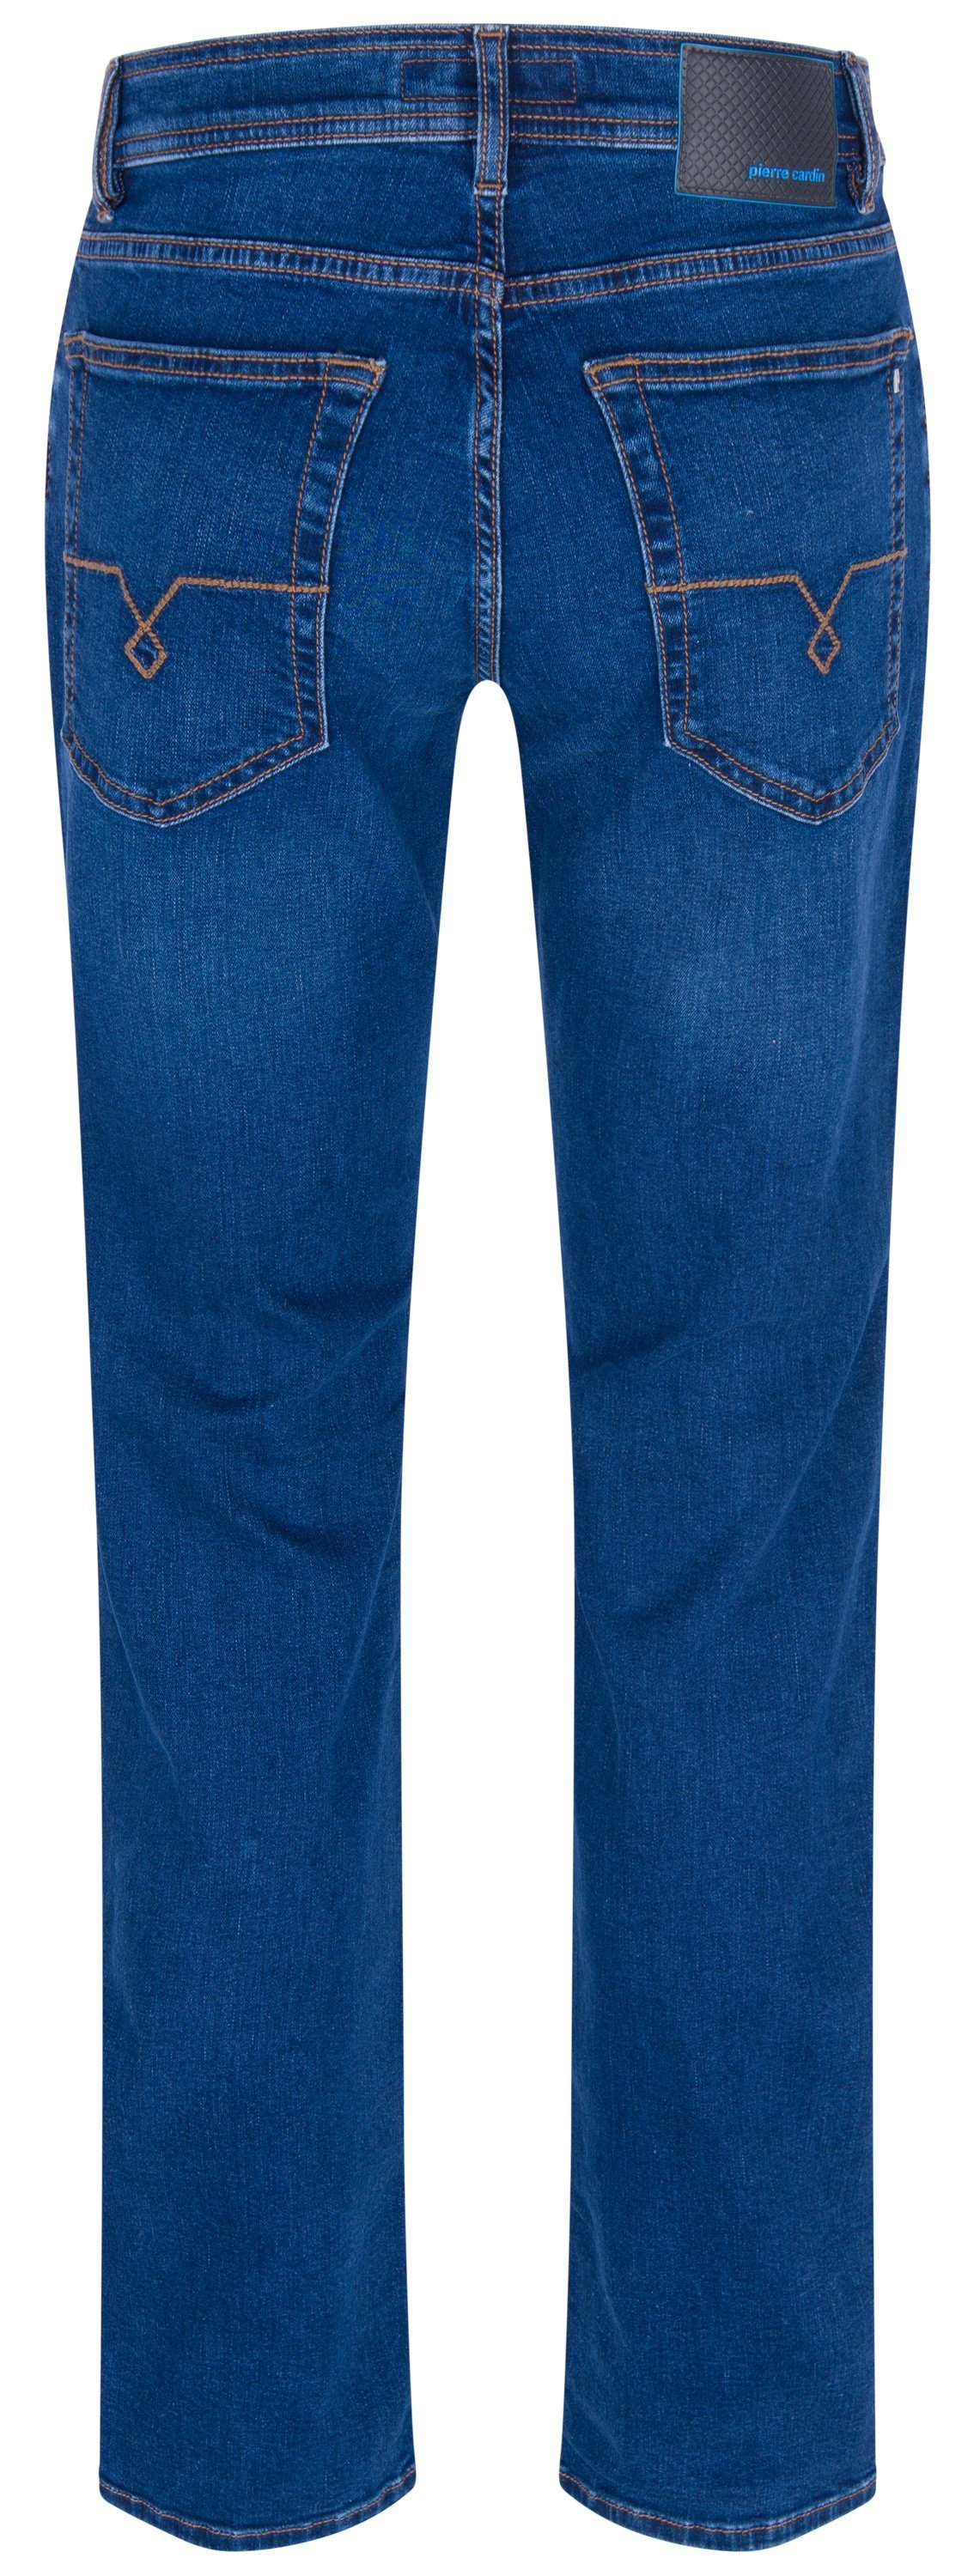 Pierre Cardin 5-Pocket-Jeans 7106.6822 used - DEAUVILLE CLIMA blue PIERRE CONTROL 31960 CARDIN